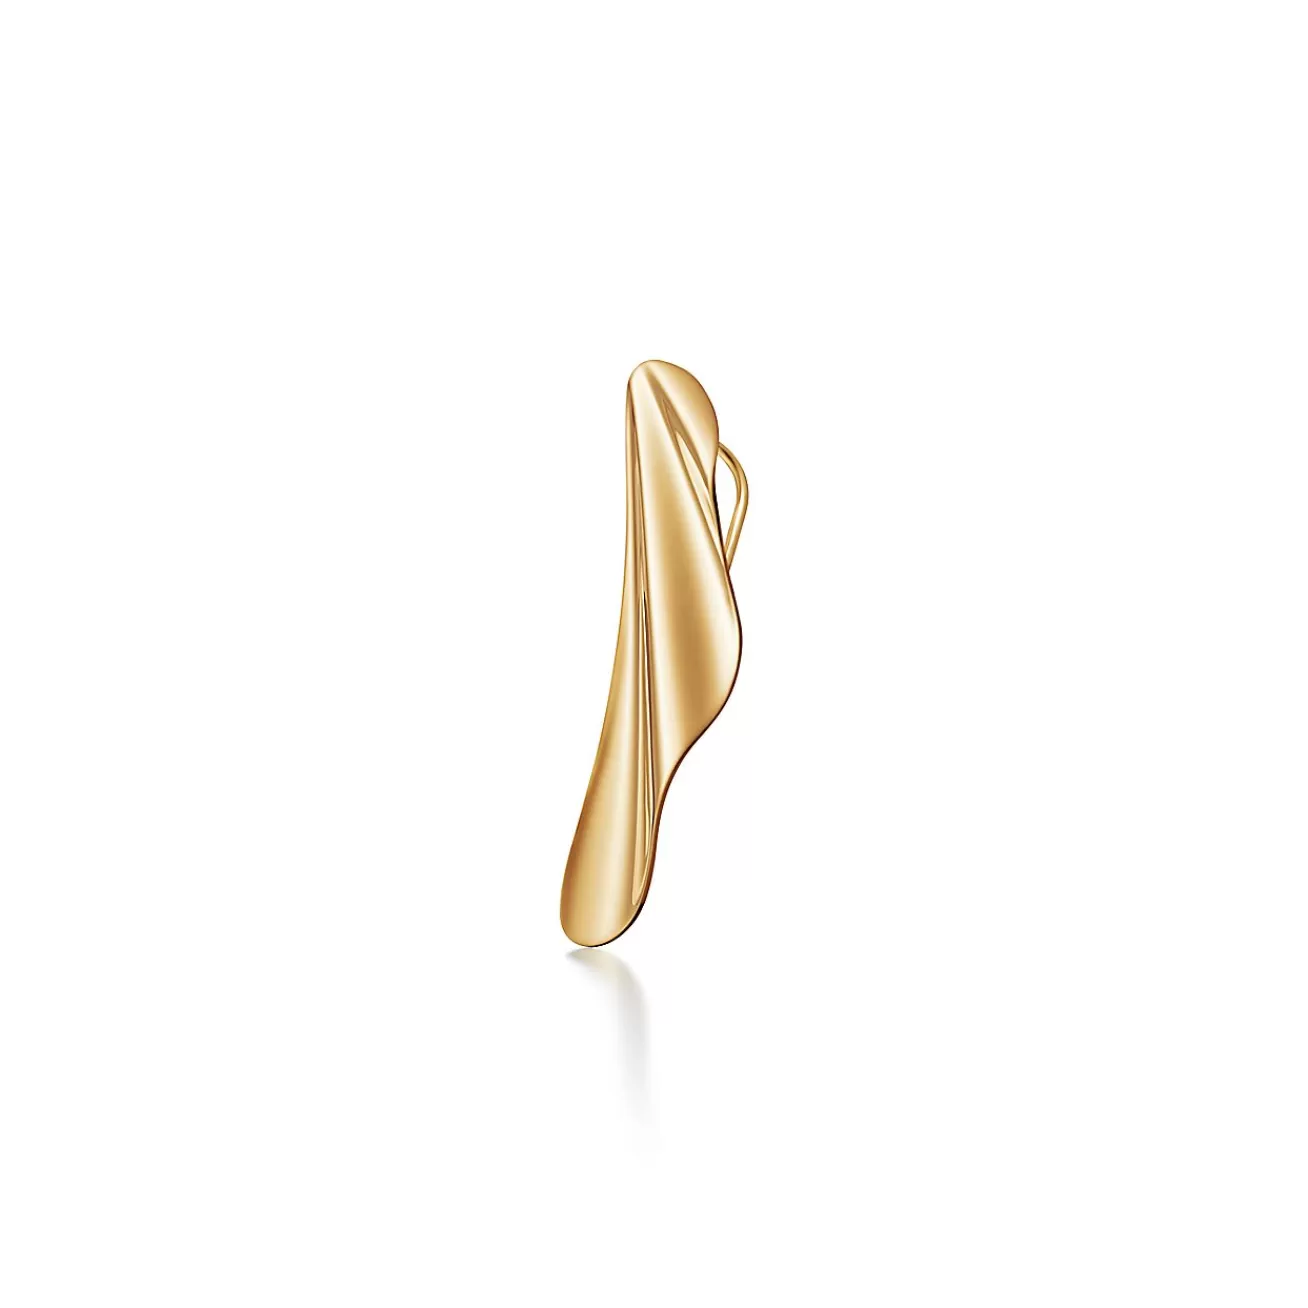 Tiffany & Co. Elsa Peretti® High Tide earrings in 18k gold, small. | ^ Earrings | Gifts for Her